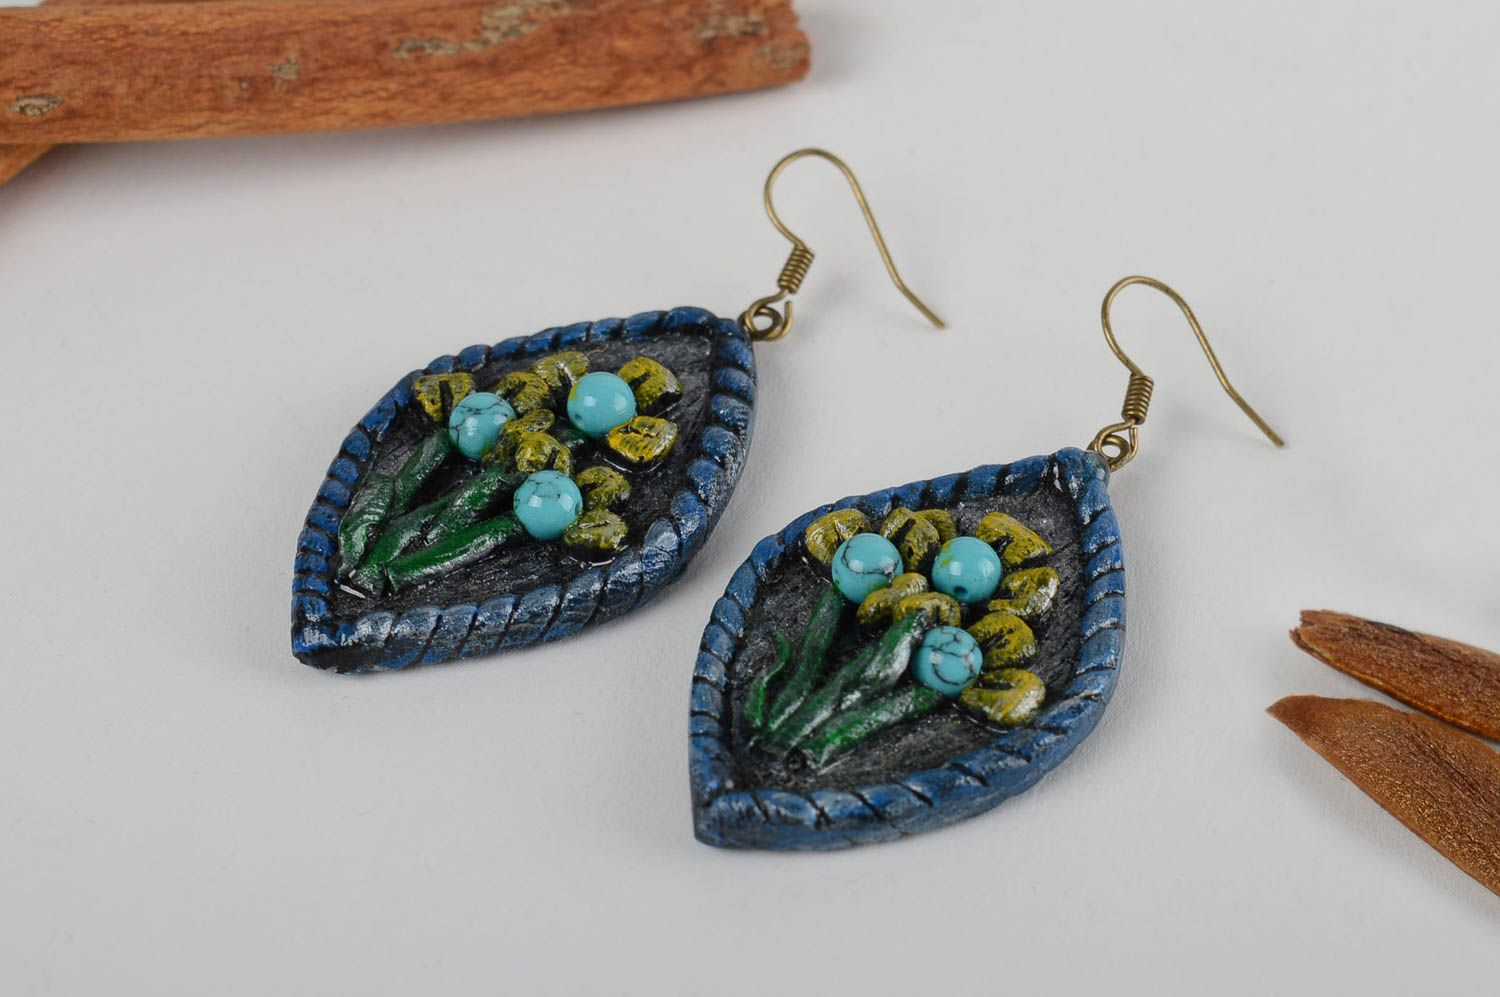 Handmade designer earrings jewelry with natural stone unusual earrings photo 1